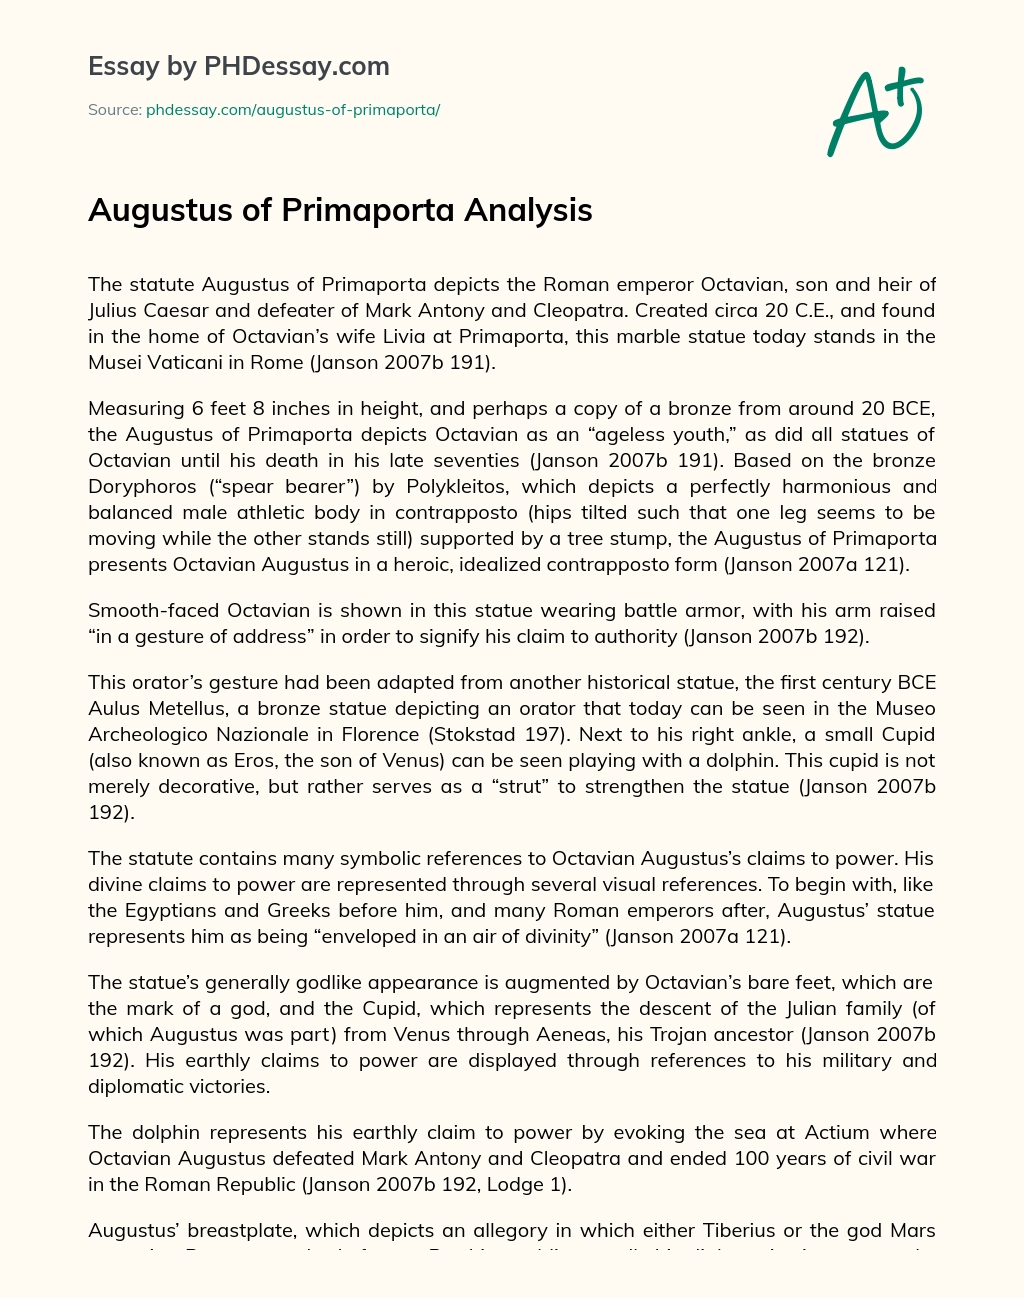 Augustus of Primaporta Analysis essay